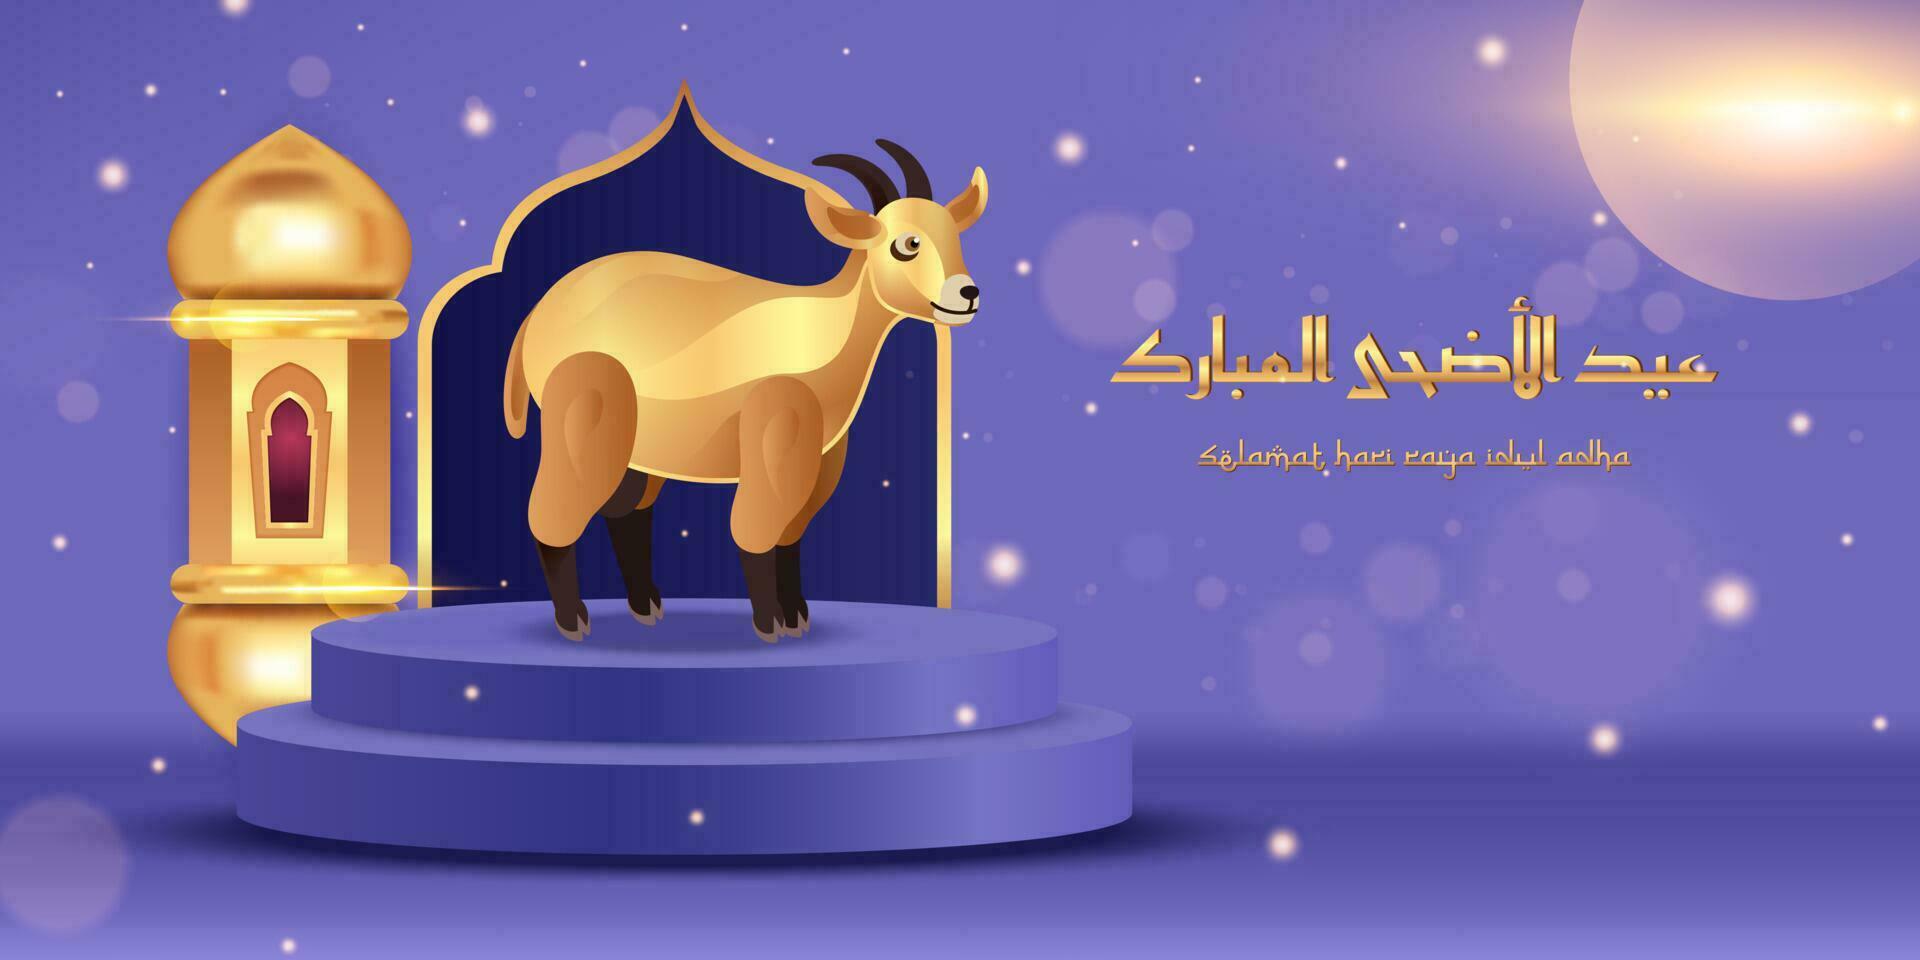 Eid Al Adha 3D Banner Design Vector Illustration. Islamic and Arabic Background for Muslim Community Festival. Moslem Holiday.